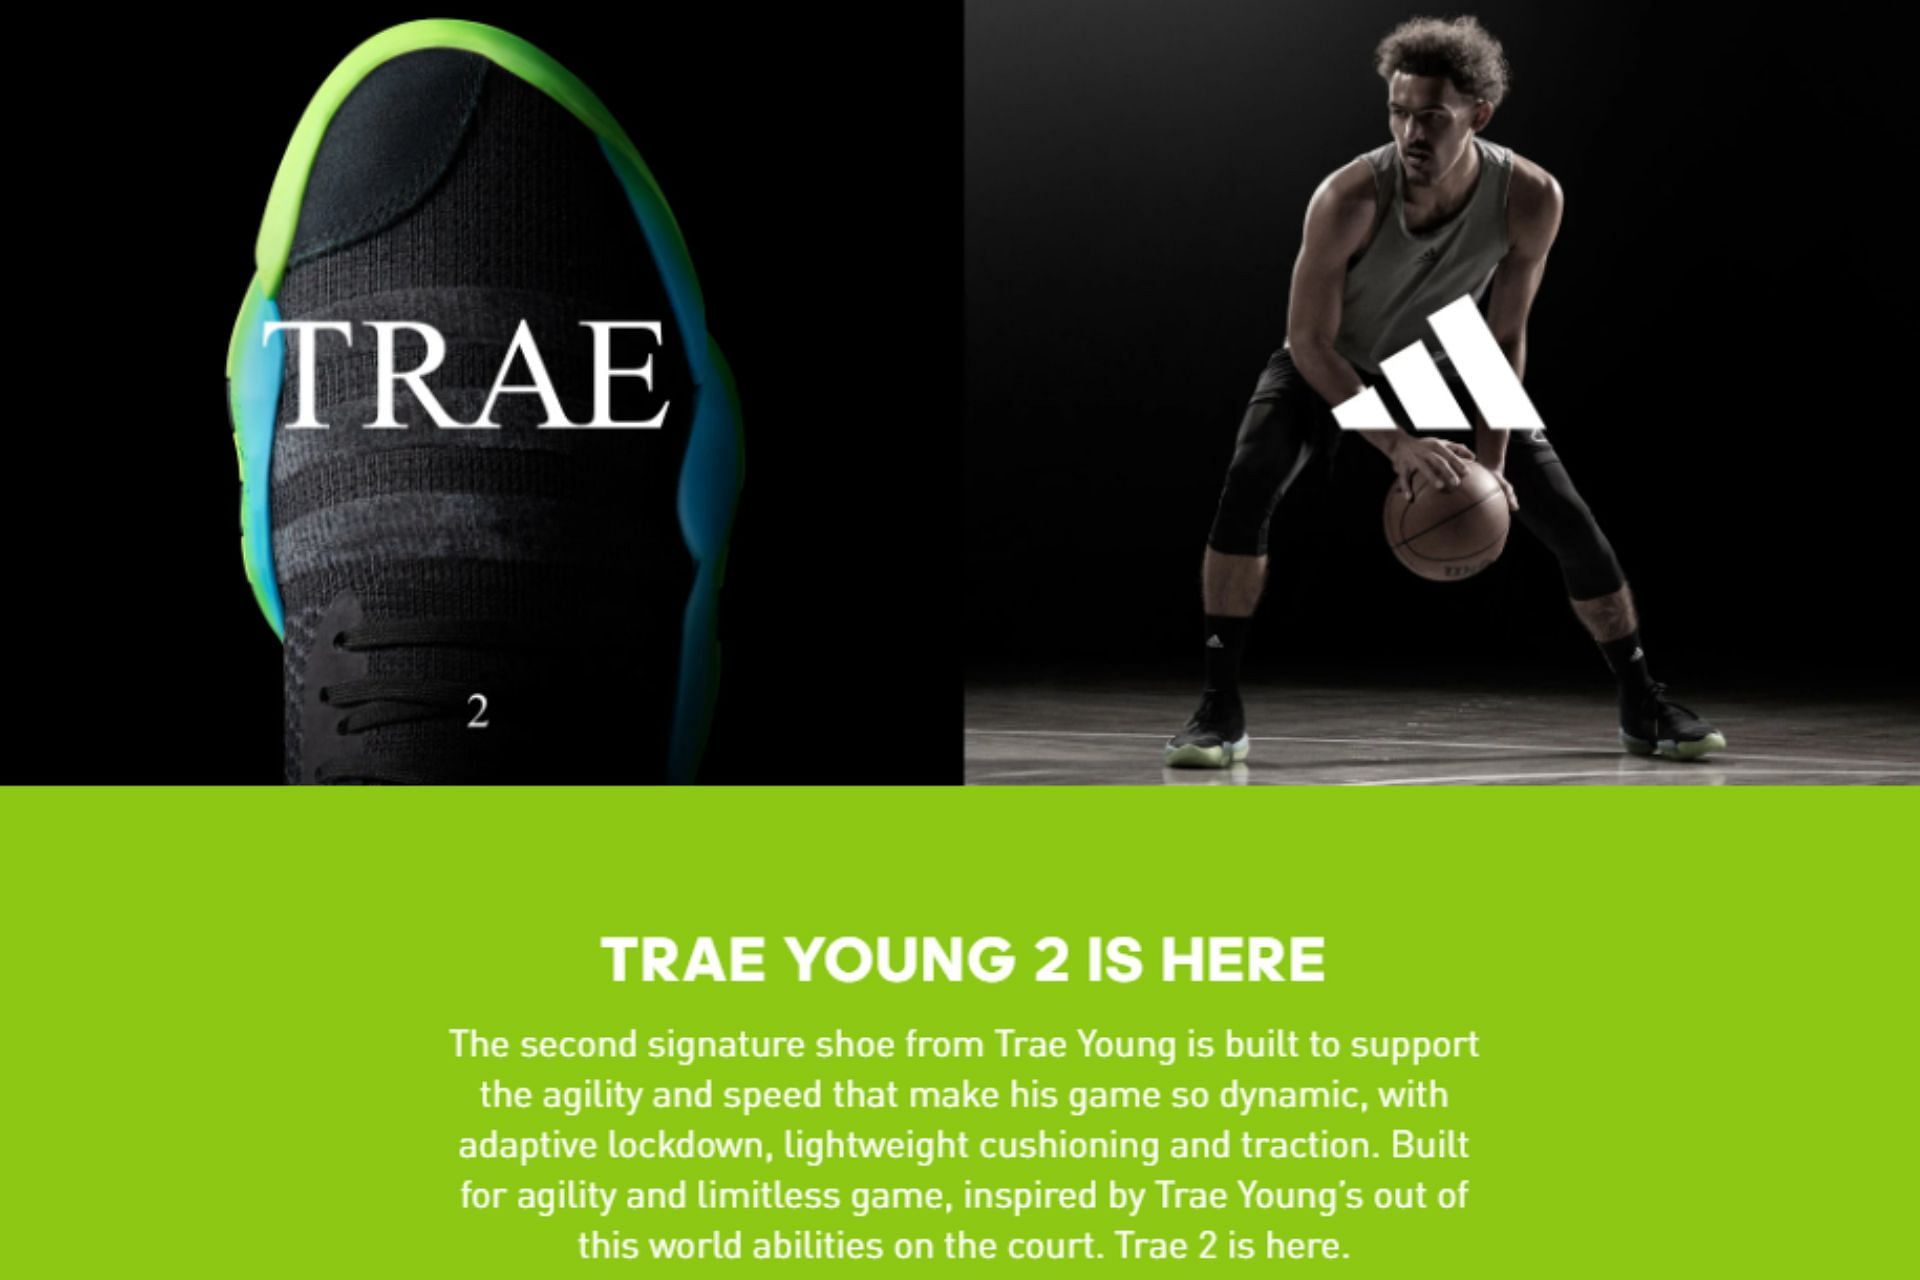 Adidas Trae Young 2 Core Black (Image via Adidas)